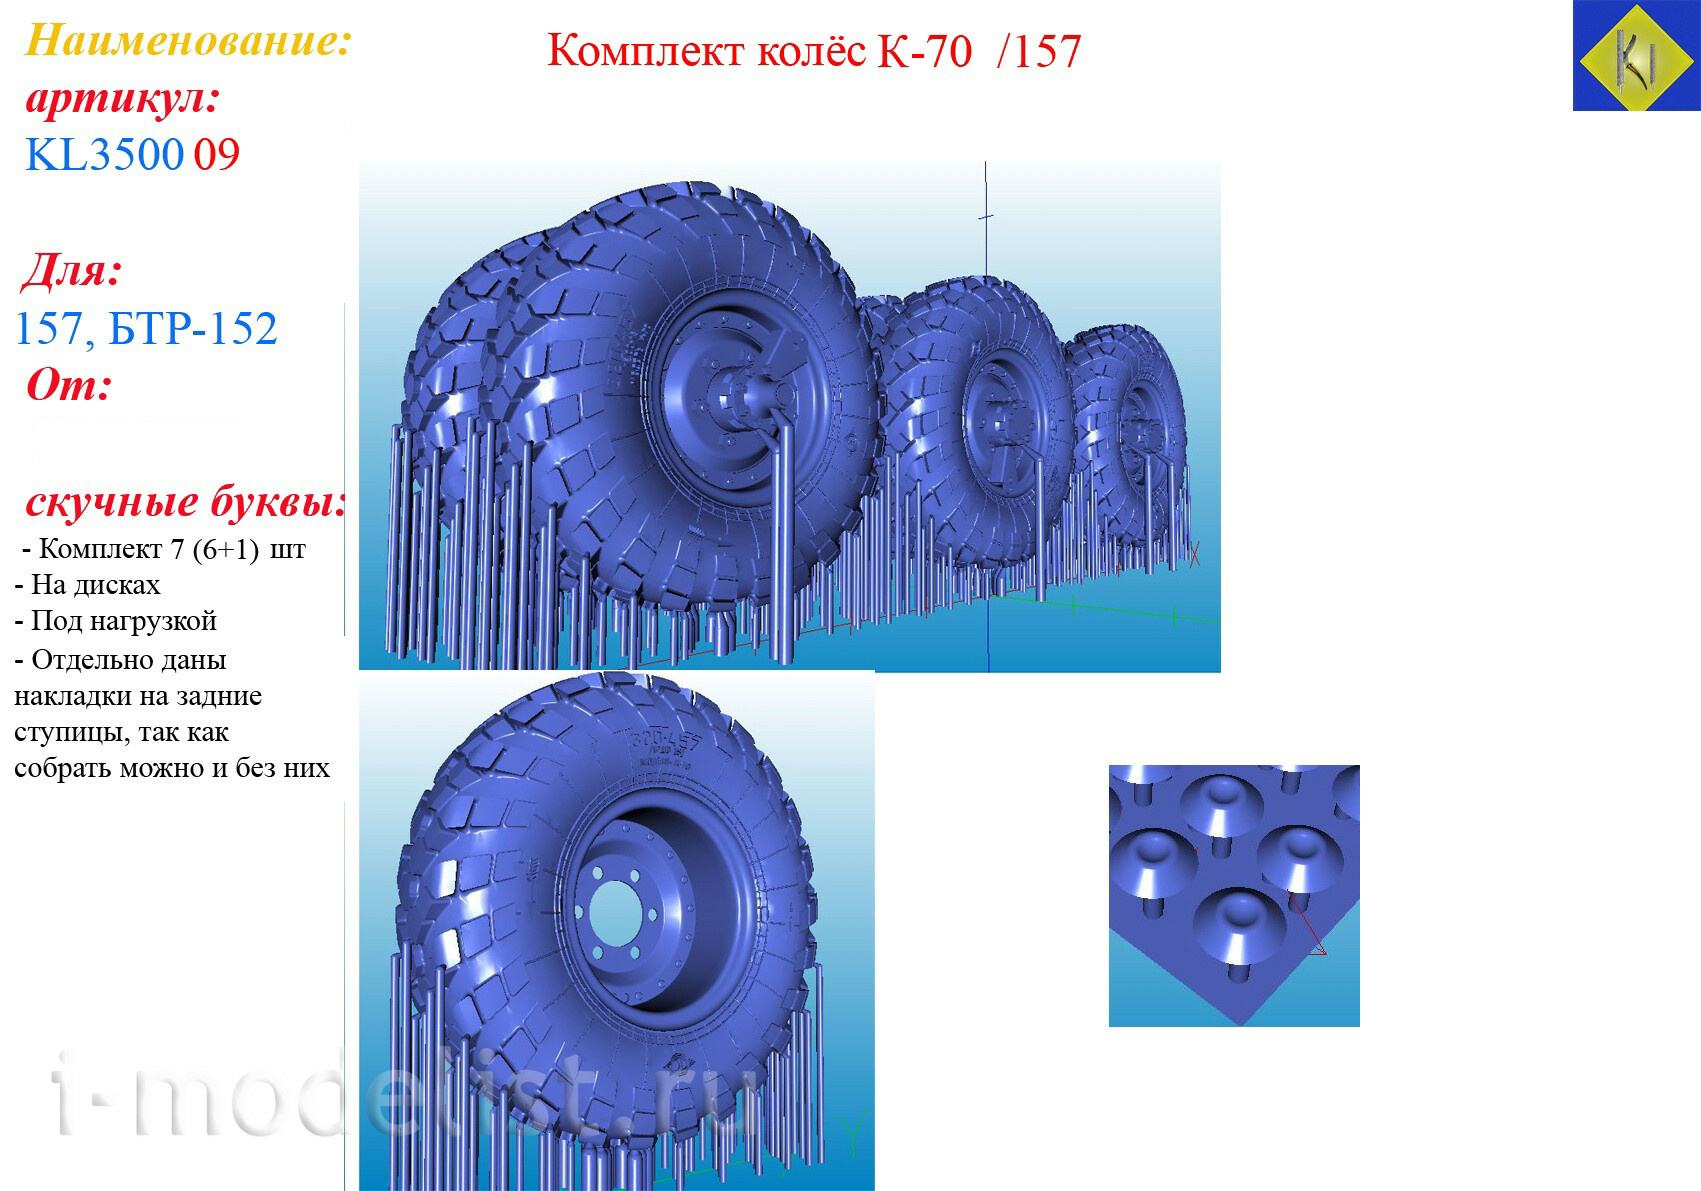 KL350009 Kraft Lab 1/35 Set of wheels K-70 /157